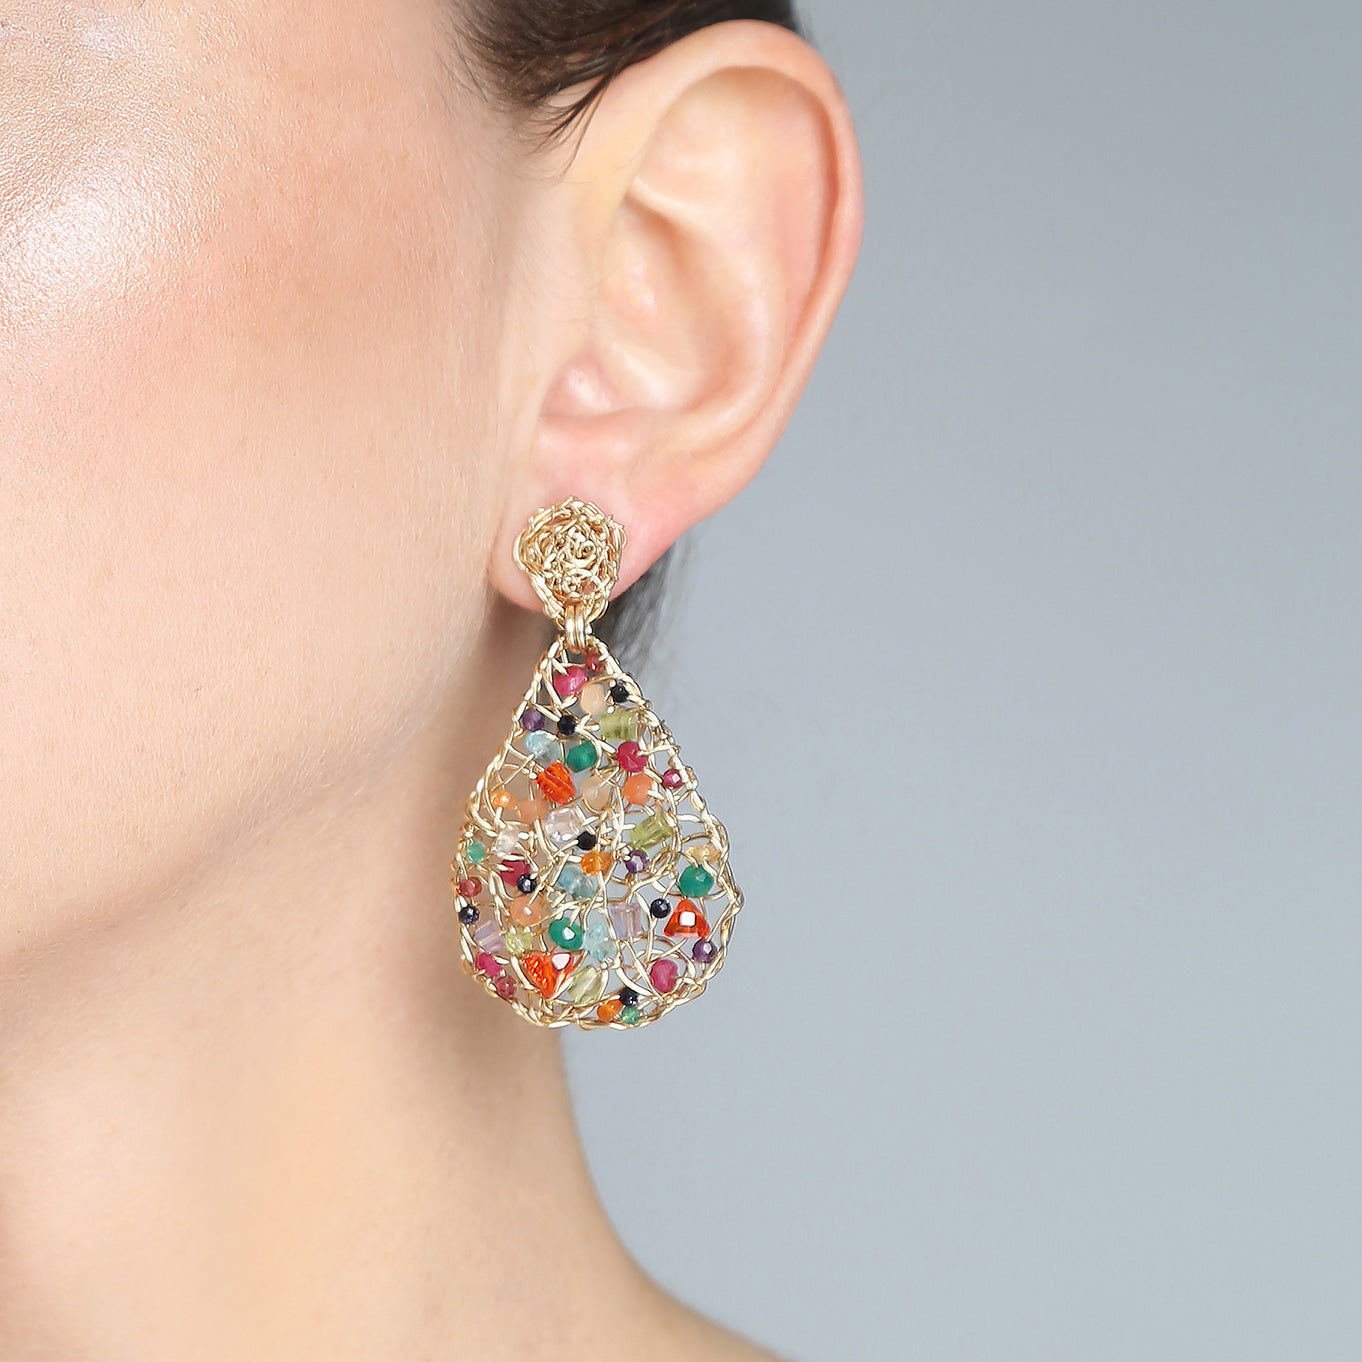 Gota Button Dangle Earrings (40mm) - Multicolor Gems Mix Earrings TARBAY   